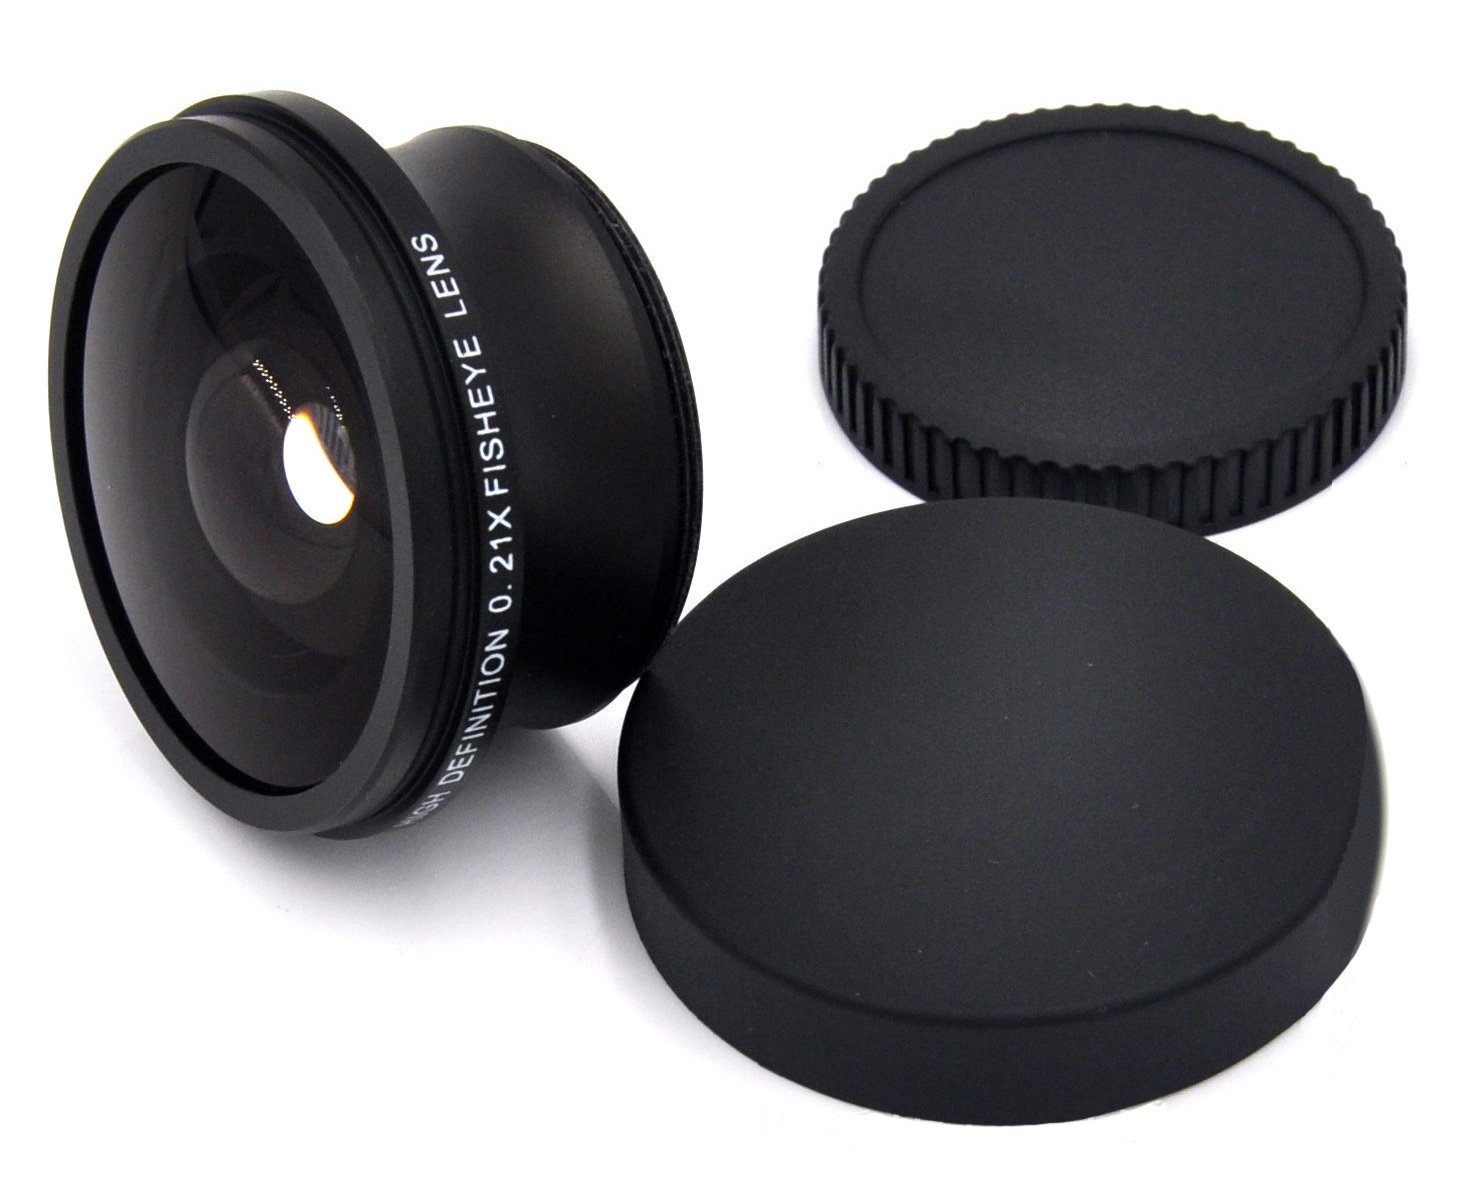 0.21x High Definition Fish-Eye Lens (37mm) for Sony Handycam HDR-SR12